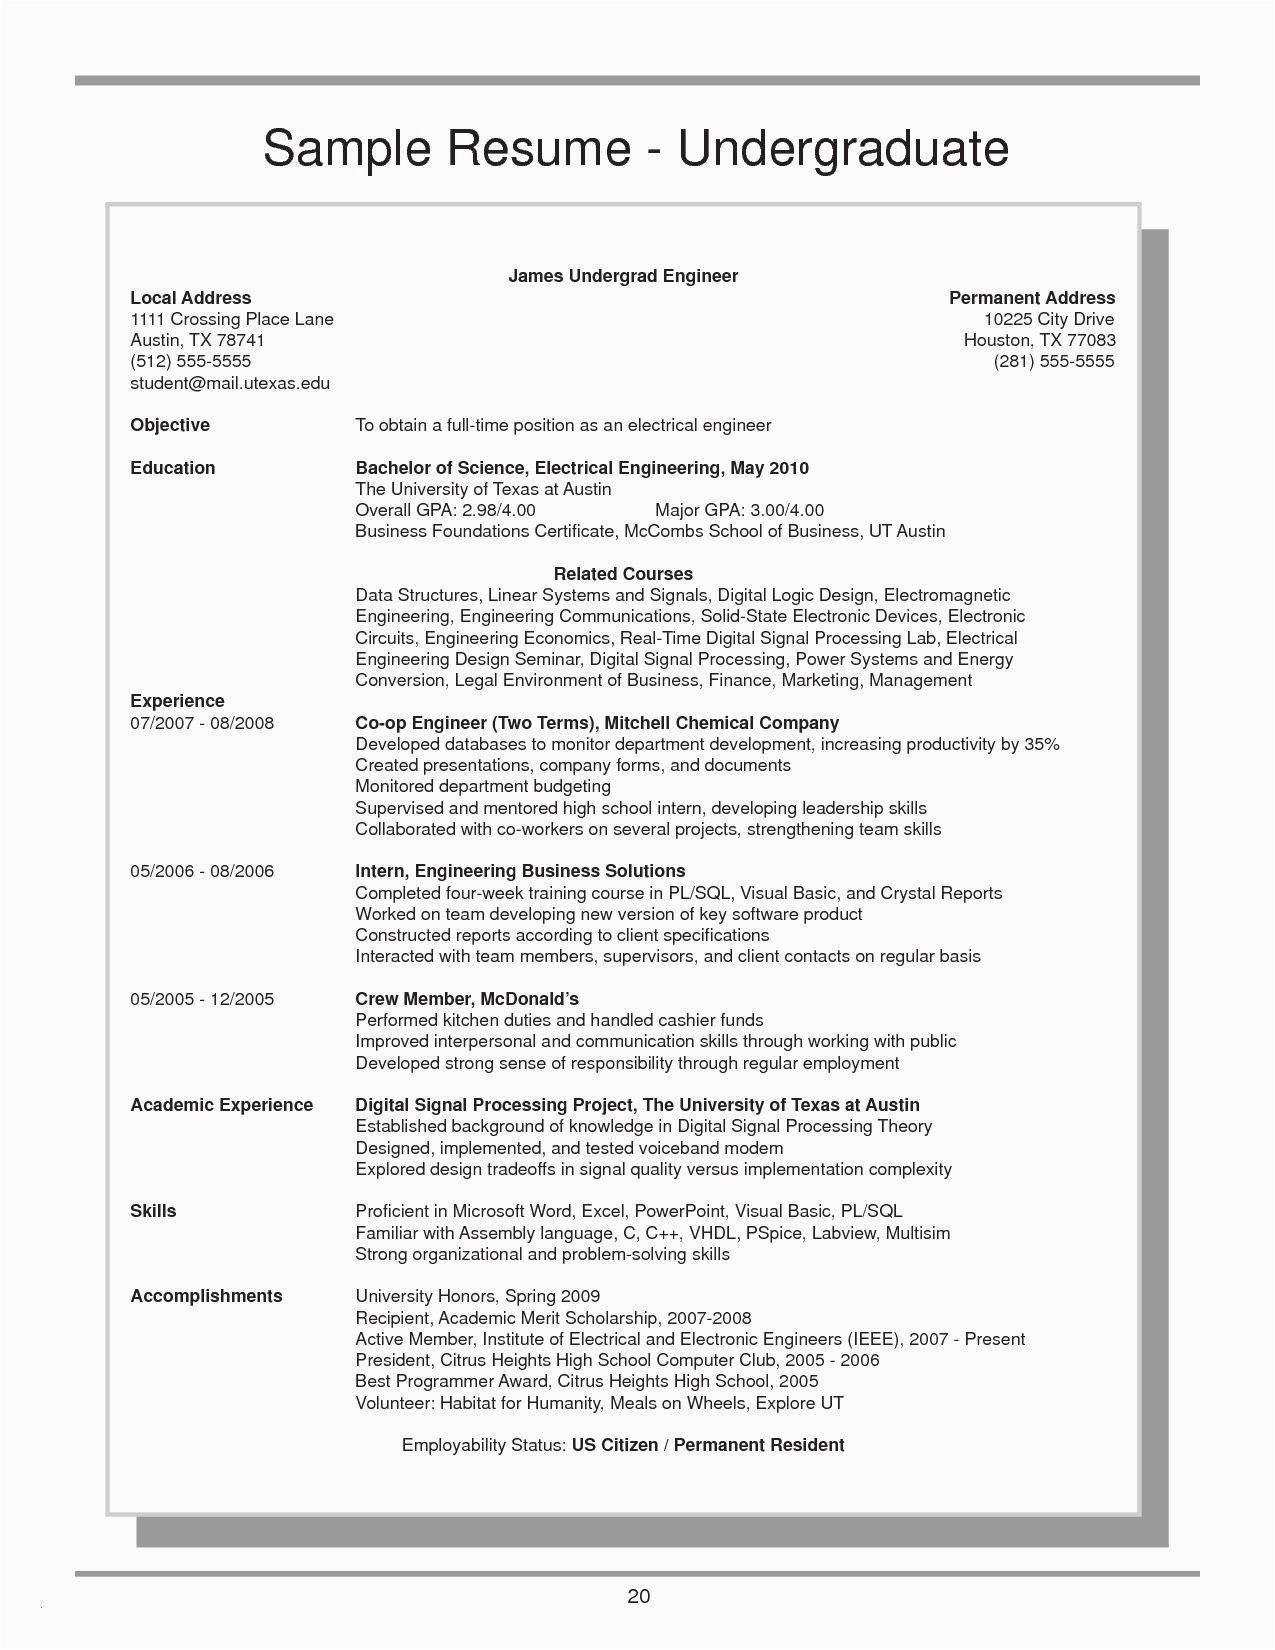 mc bs school of business resume template